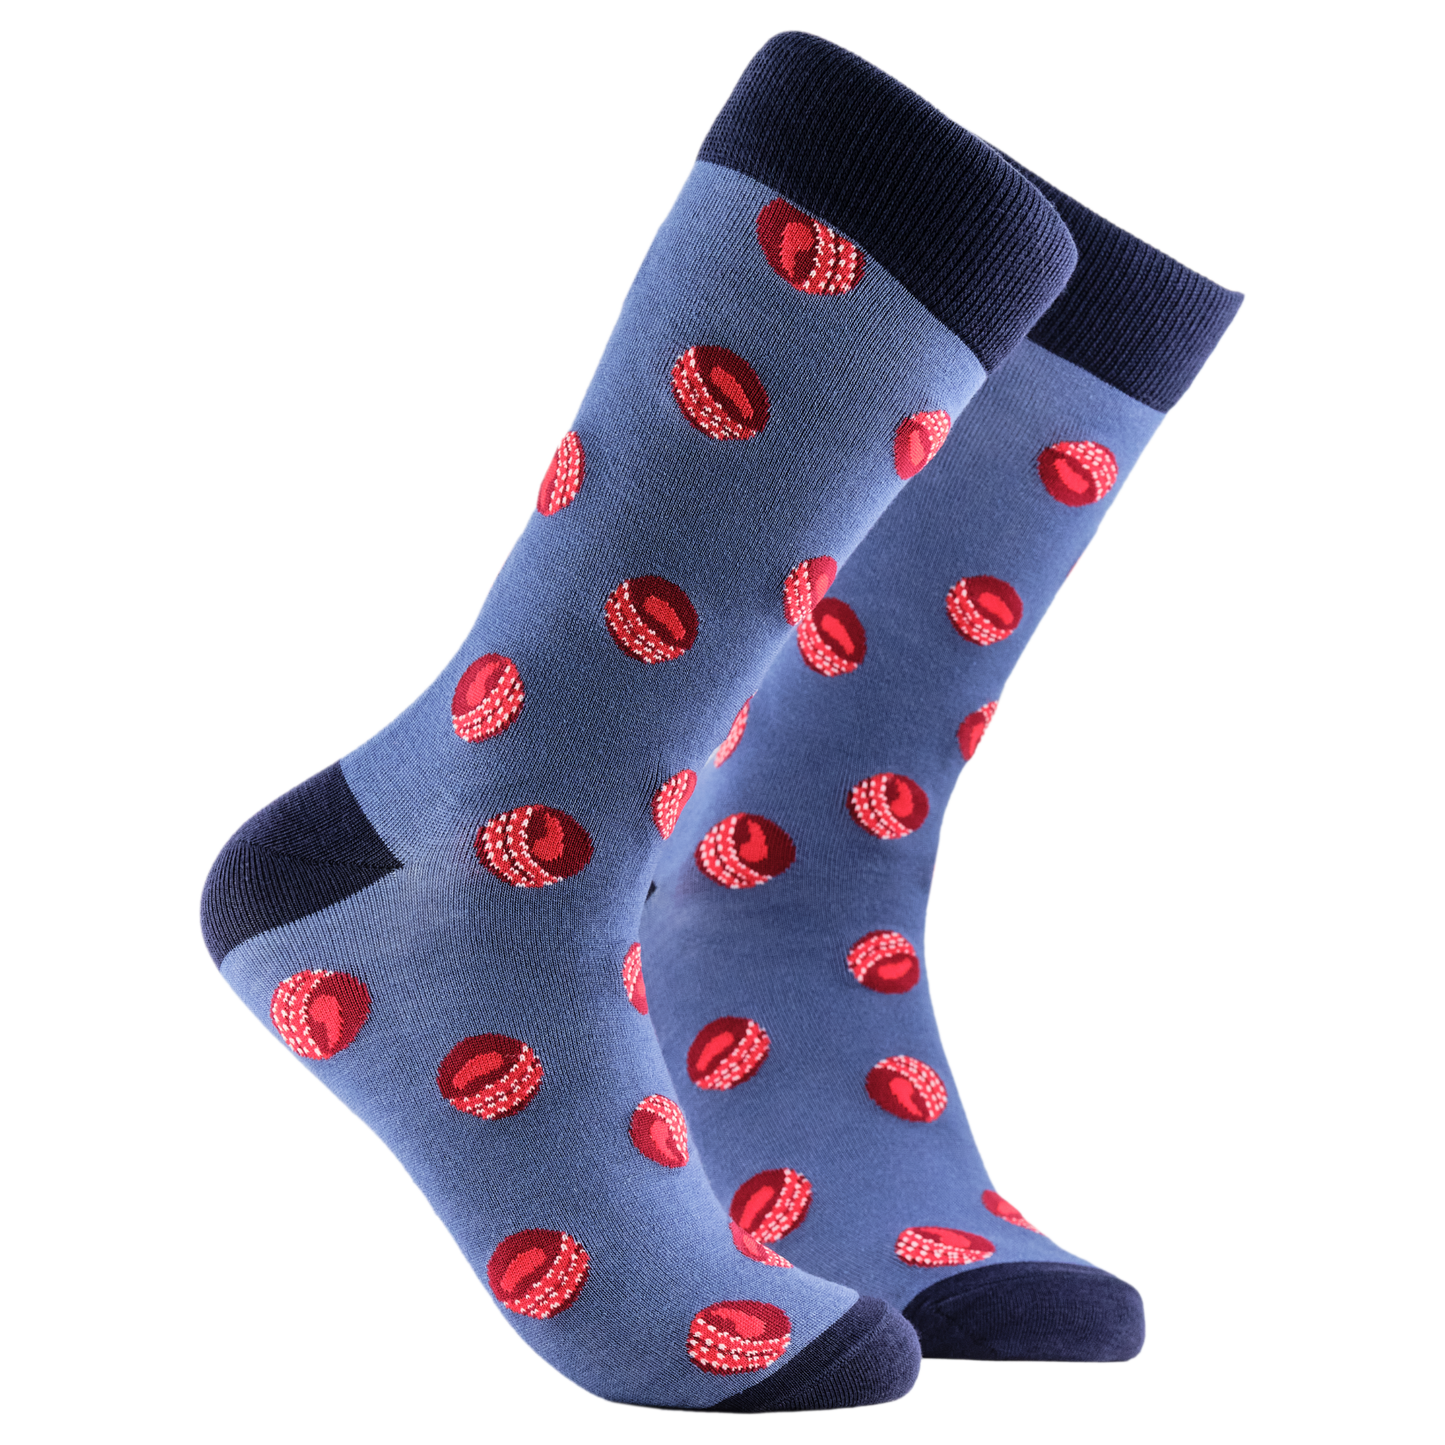 Cricket Balls Bamboo Socks. A pair of socks with a cricket ball pattern. Blue legs, dark blue cuff, heel and toe.